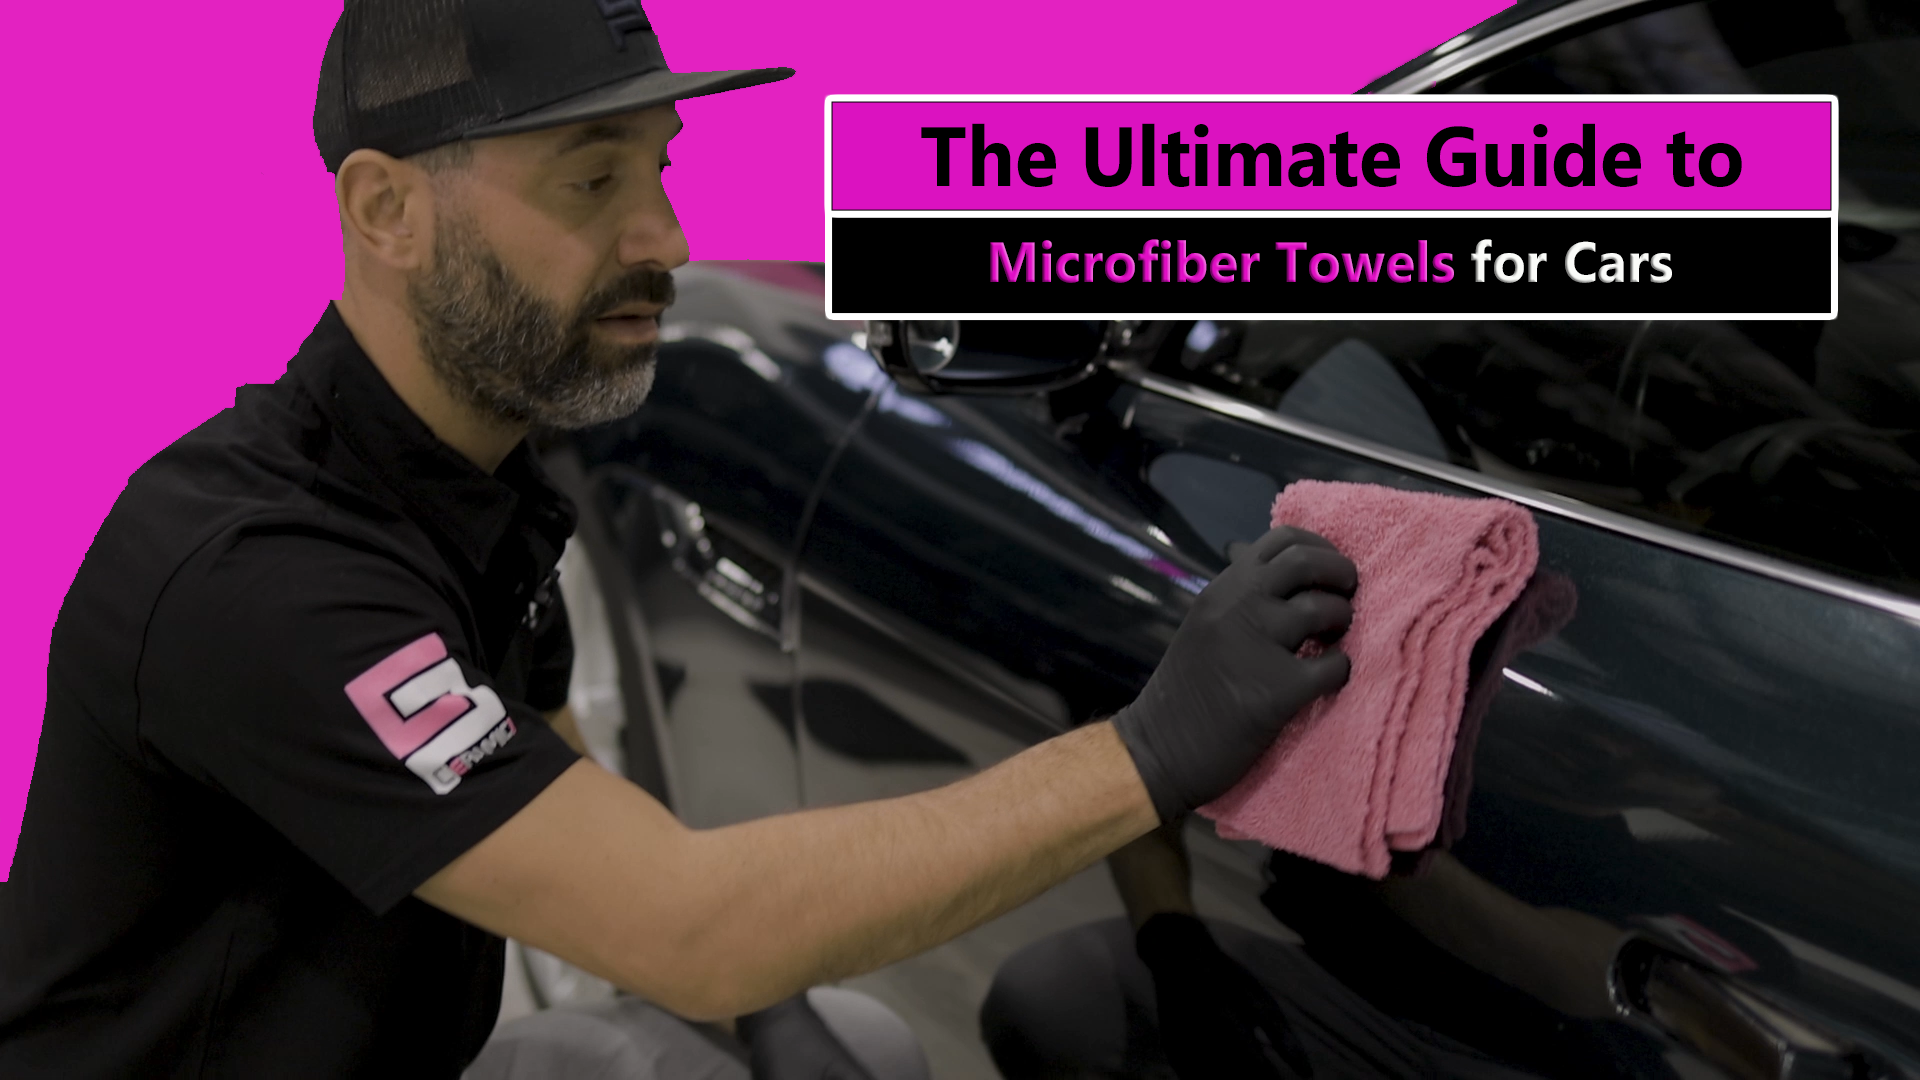 Adam's Waterless Wash Microfiber Towel